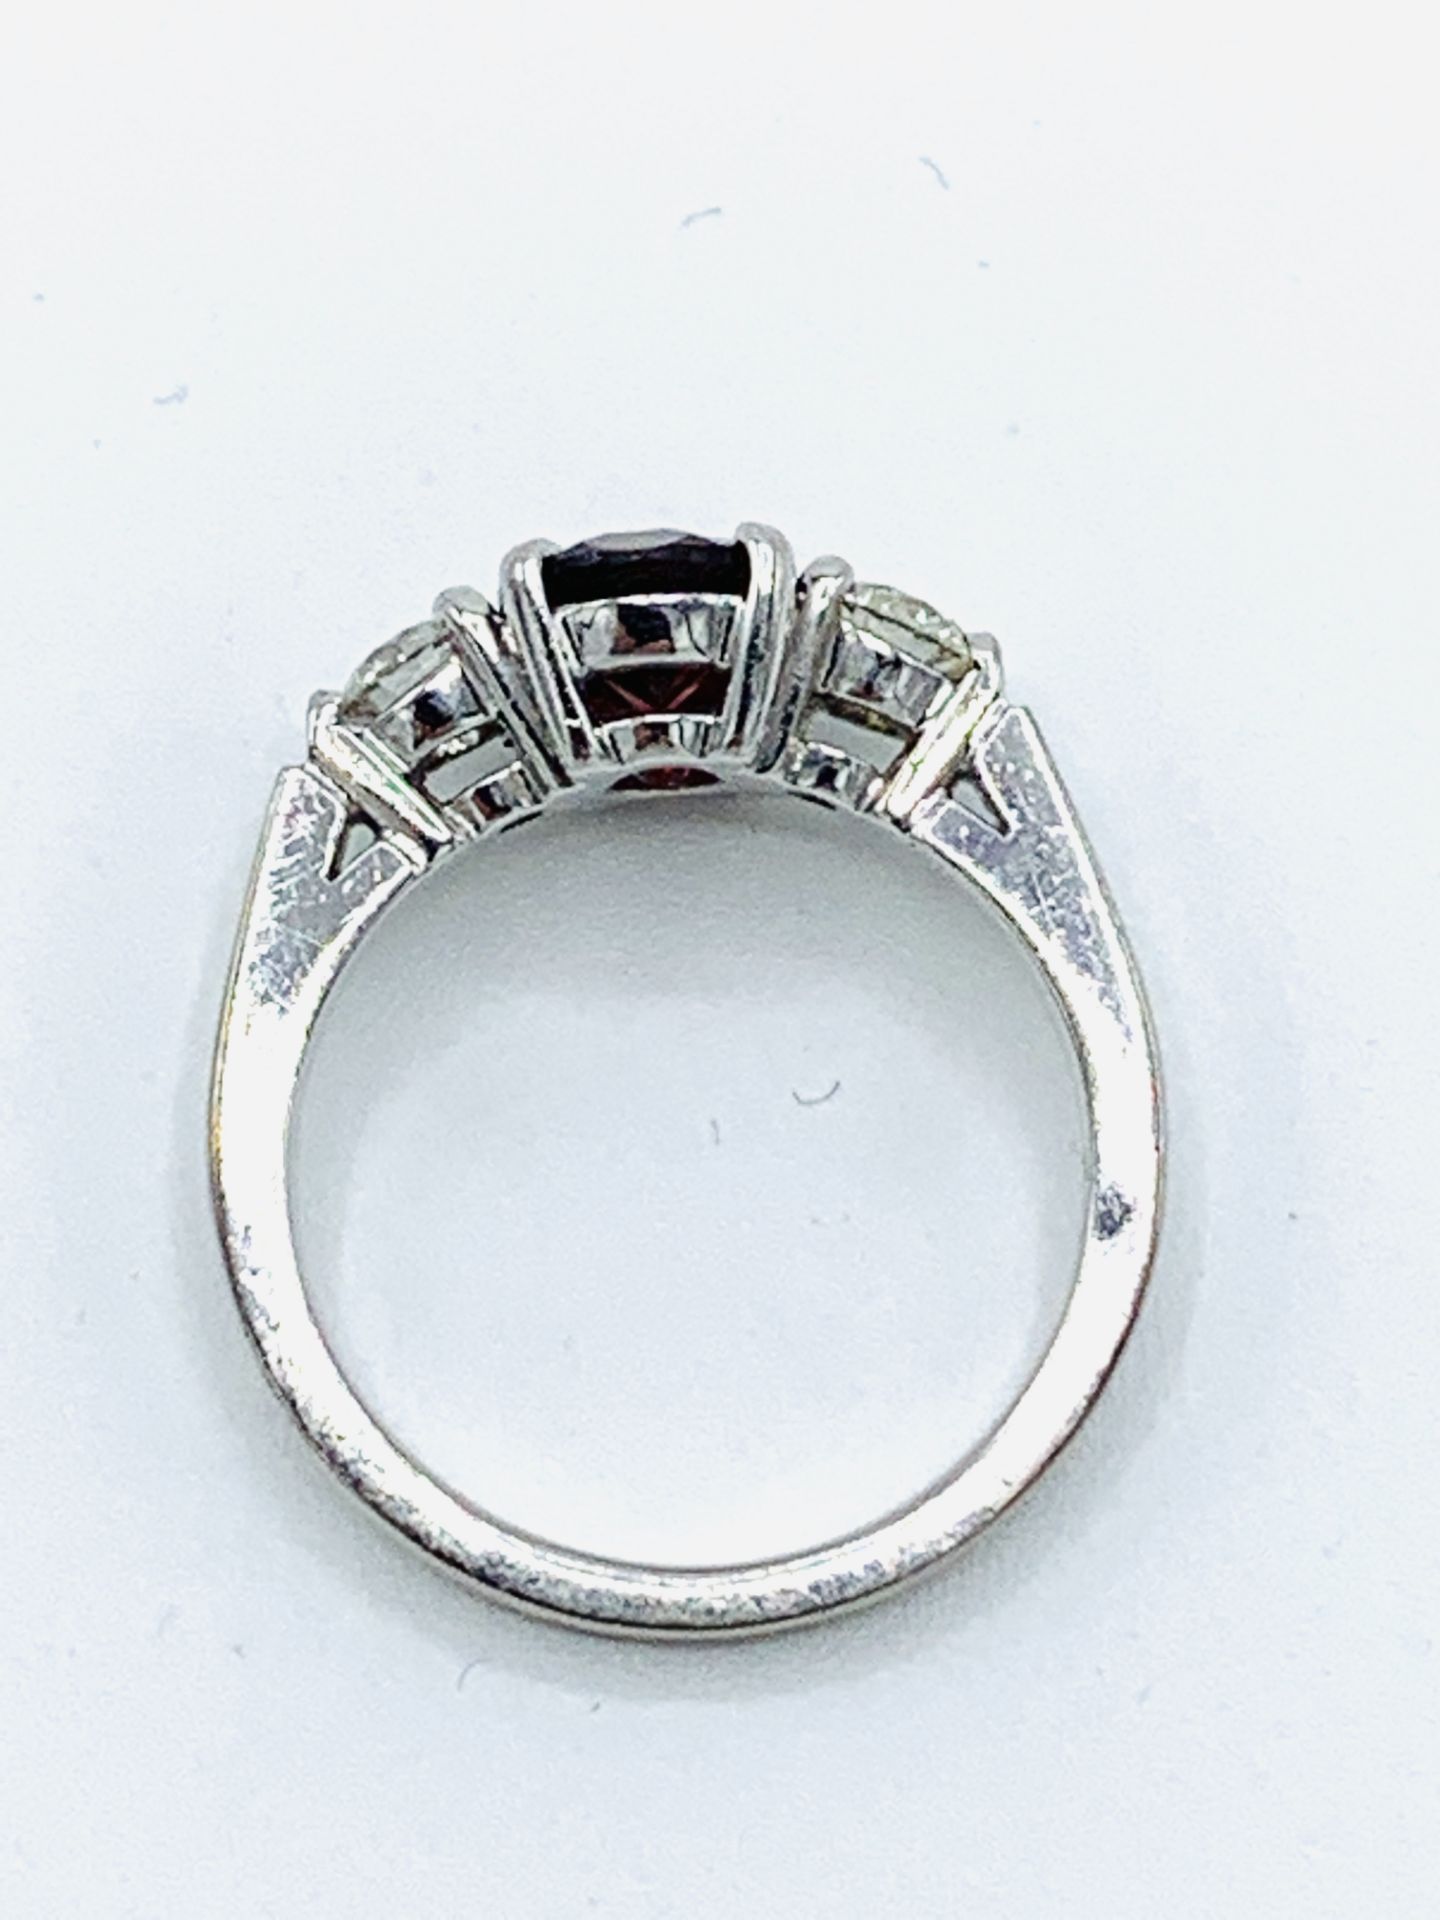 18ct white gold modern garnet and diamond ring - Image 2 of 2